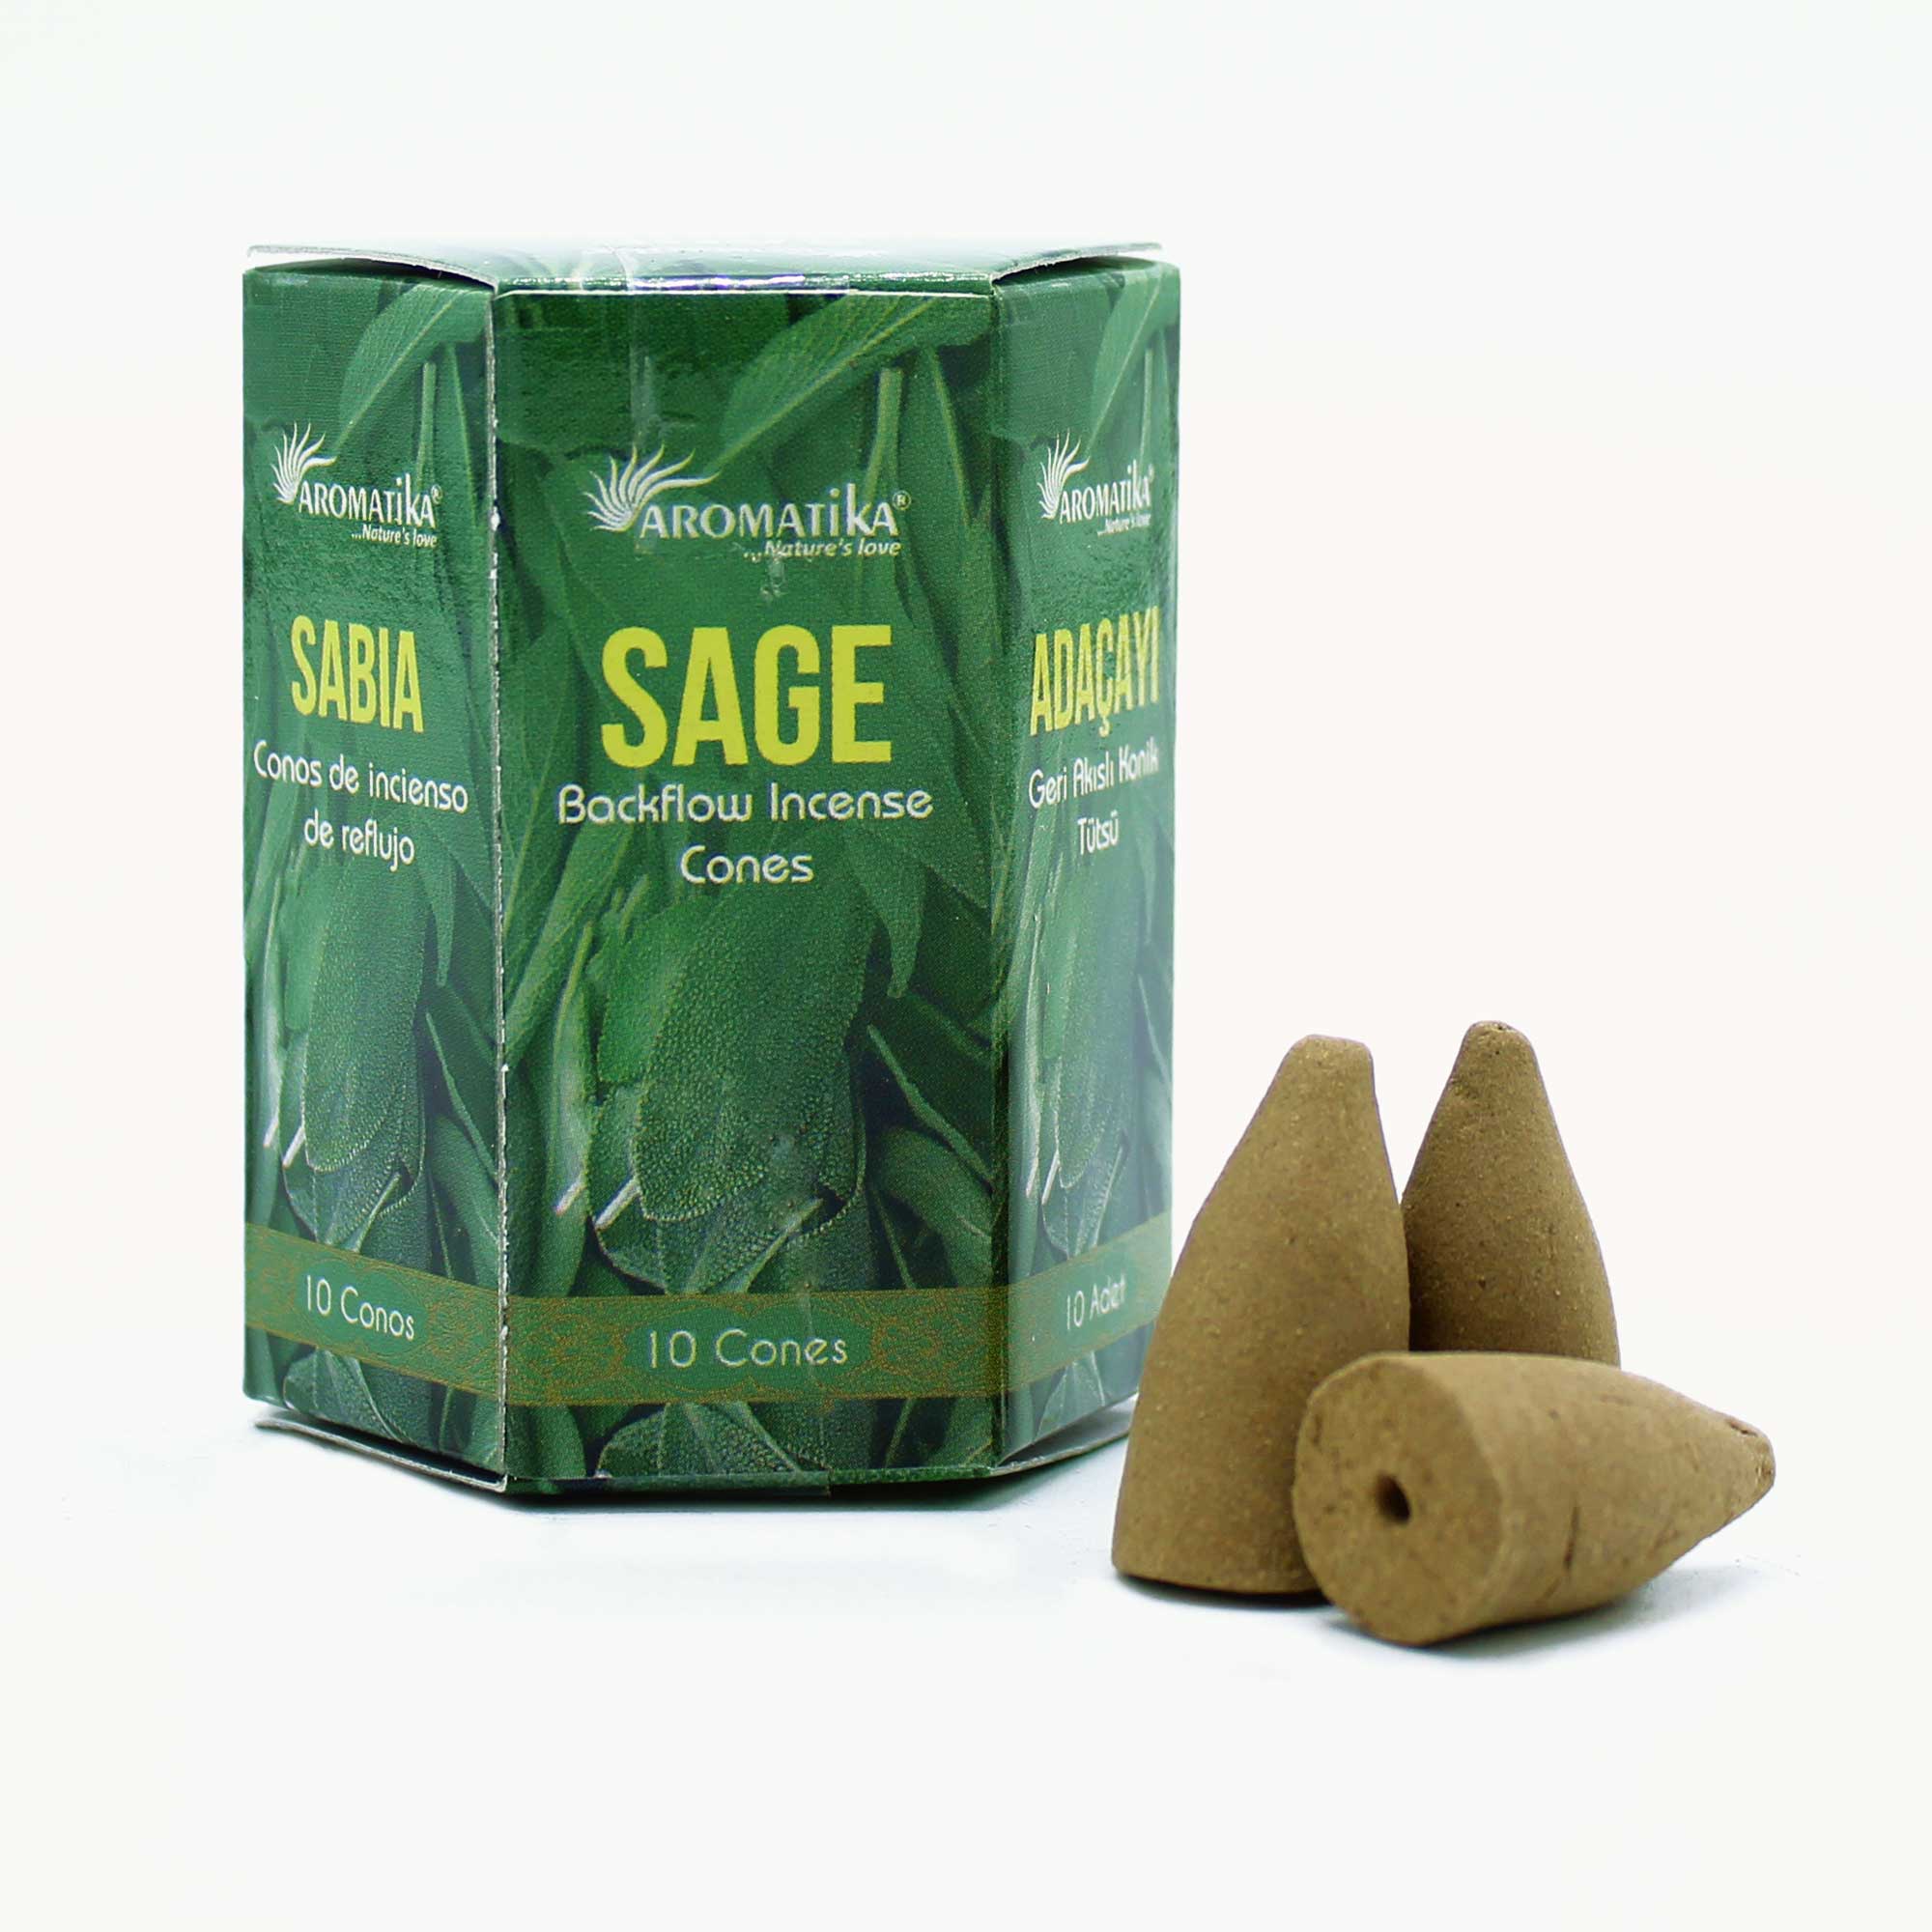 Aromatica Backflow Incense Cones - Sage Scent